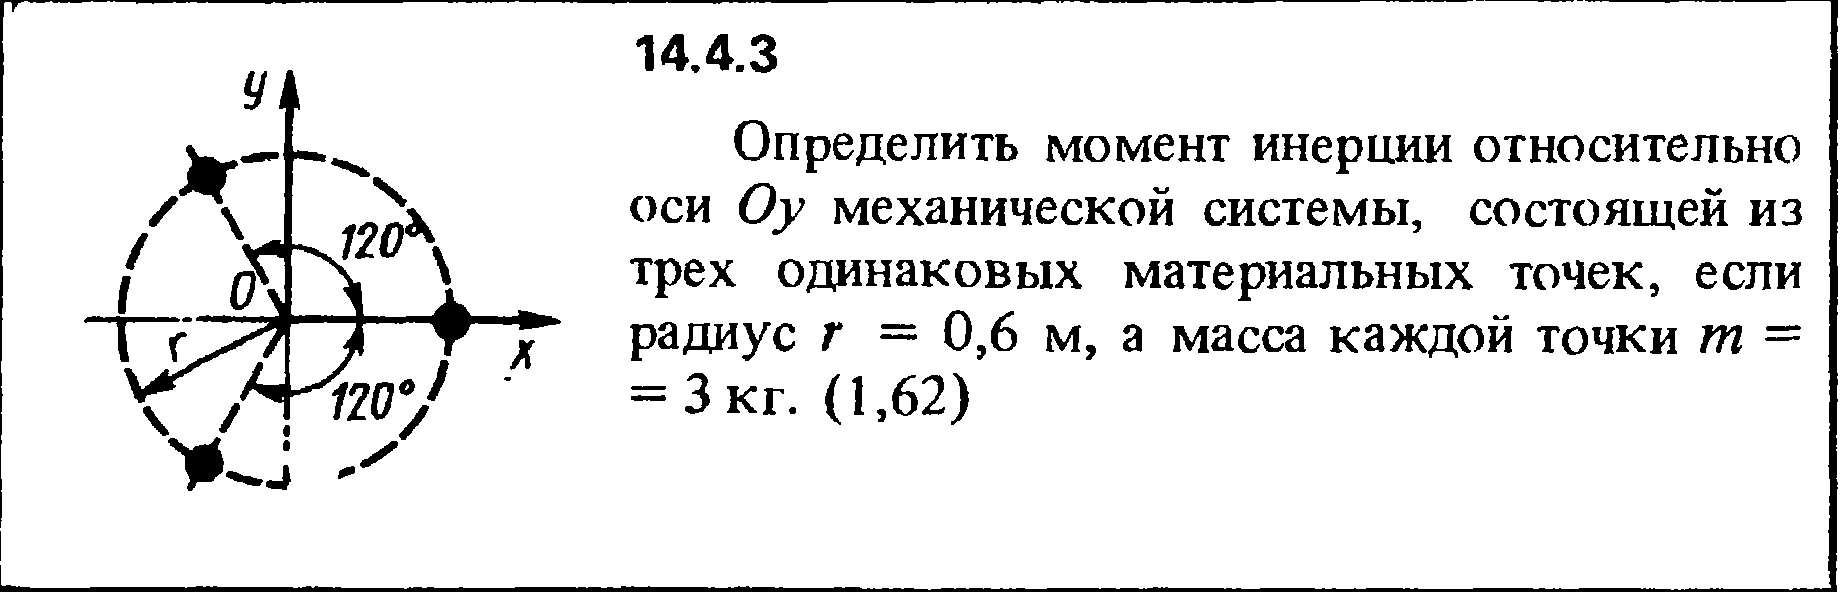 Решение задачи 14.4.3 из сборника Кепе О.Е. 1989 года